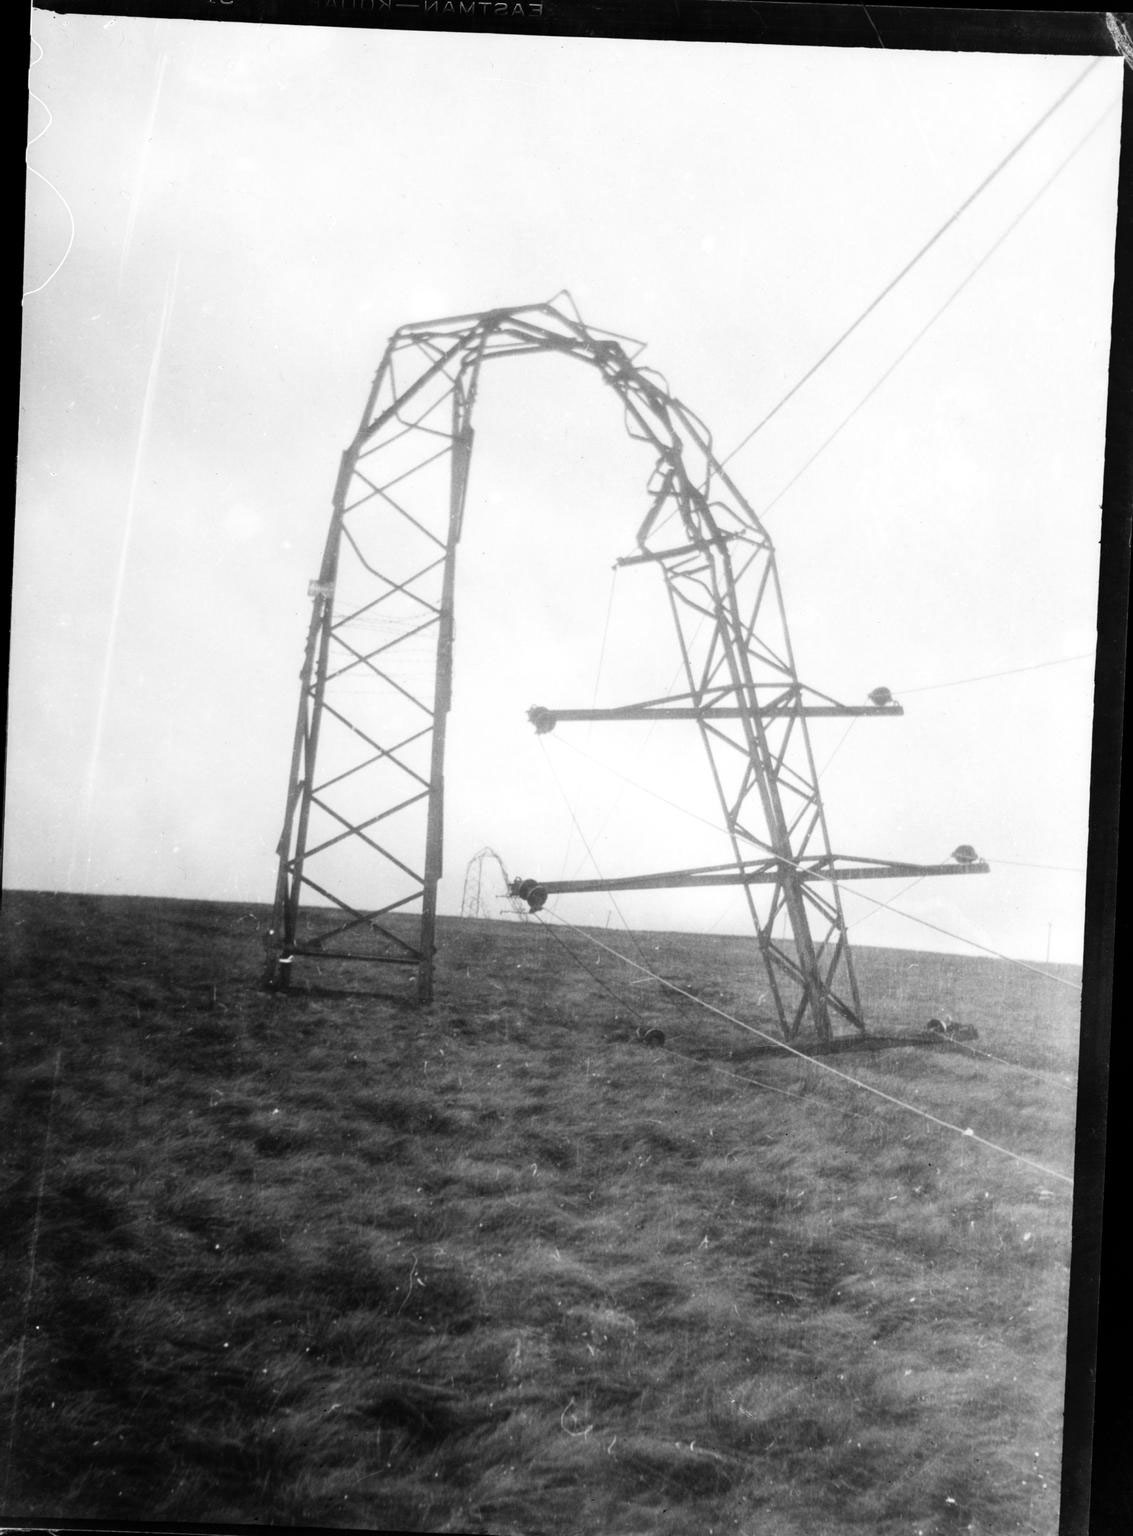 W T Glover & Co photograph of a pylon failure